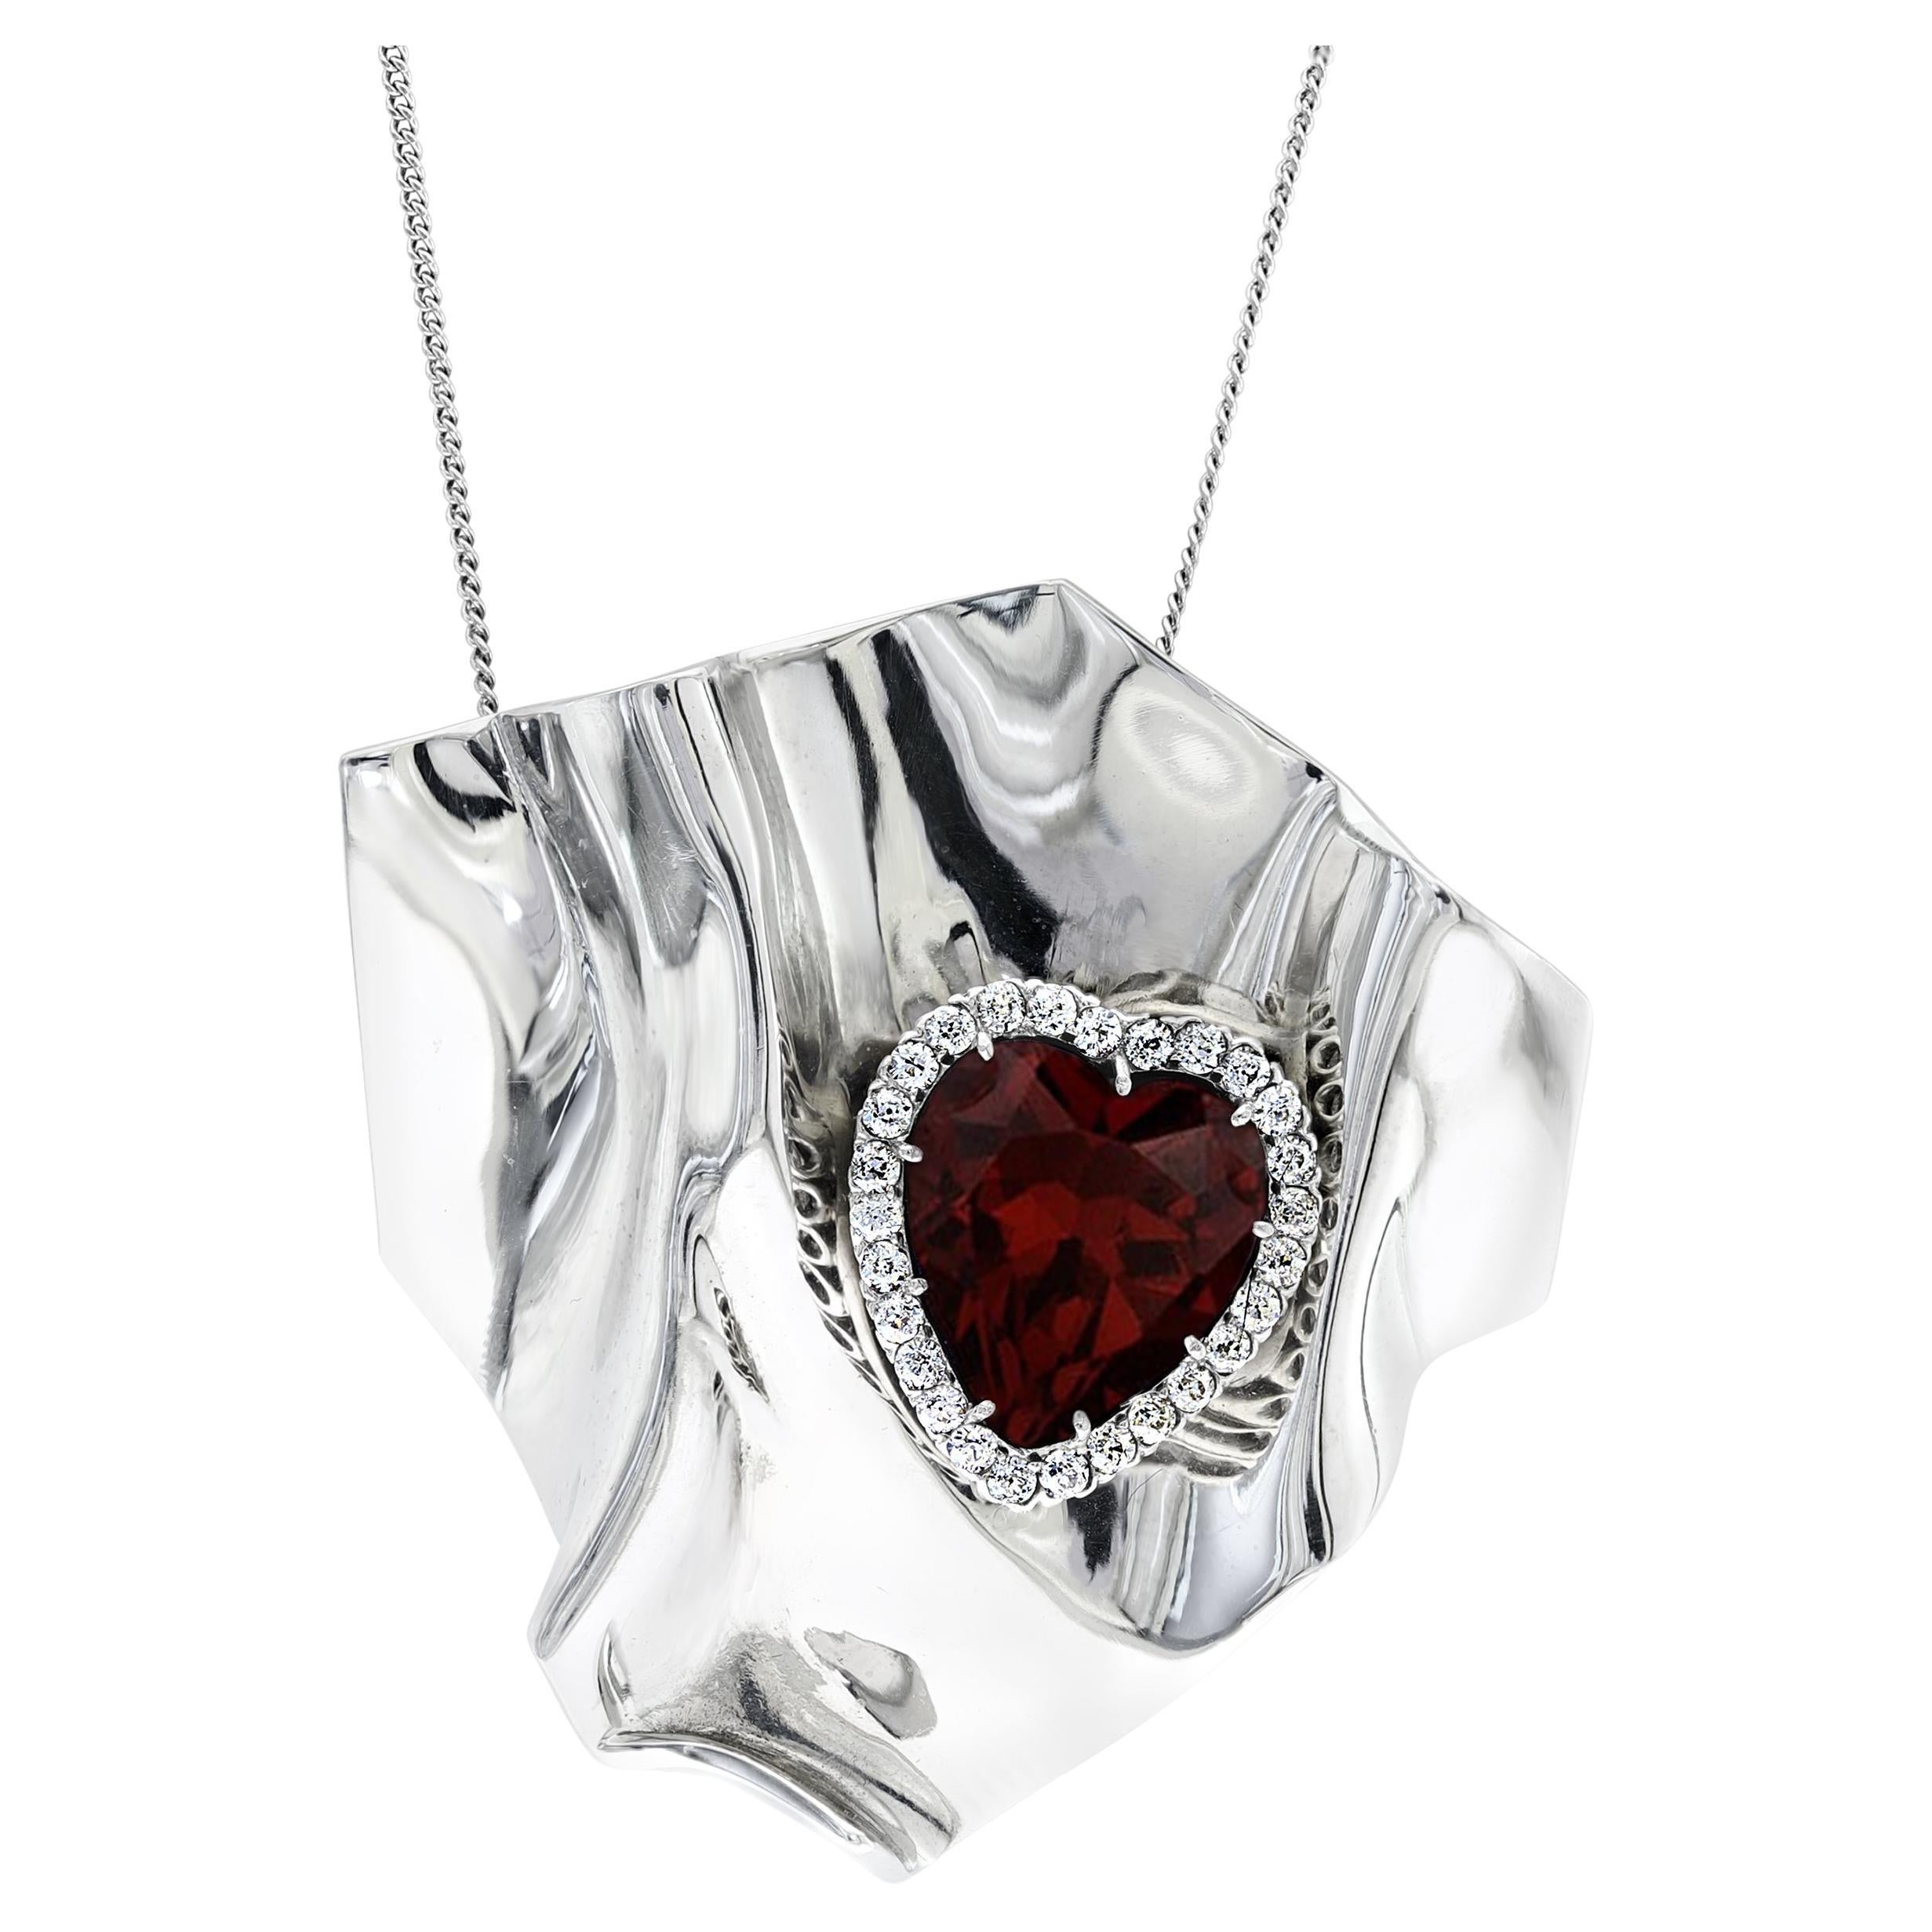 10ct Heart Shape Garnet & 1.5ct Diamond Pendant /Pin 14kt White Gold 35gm For Sale